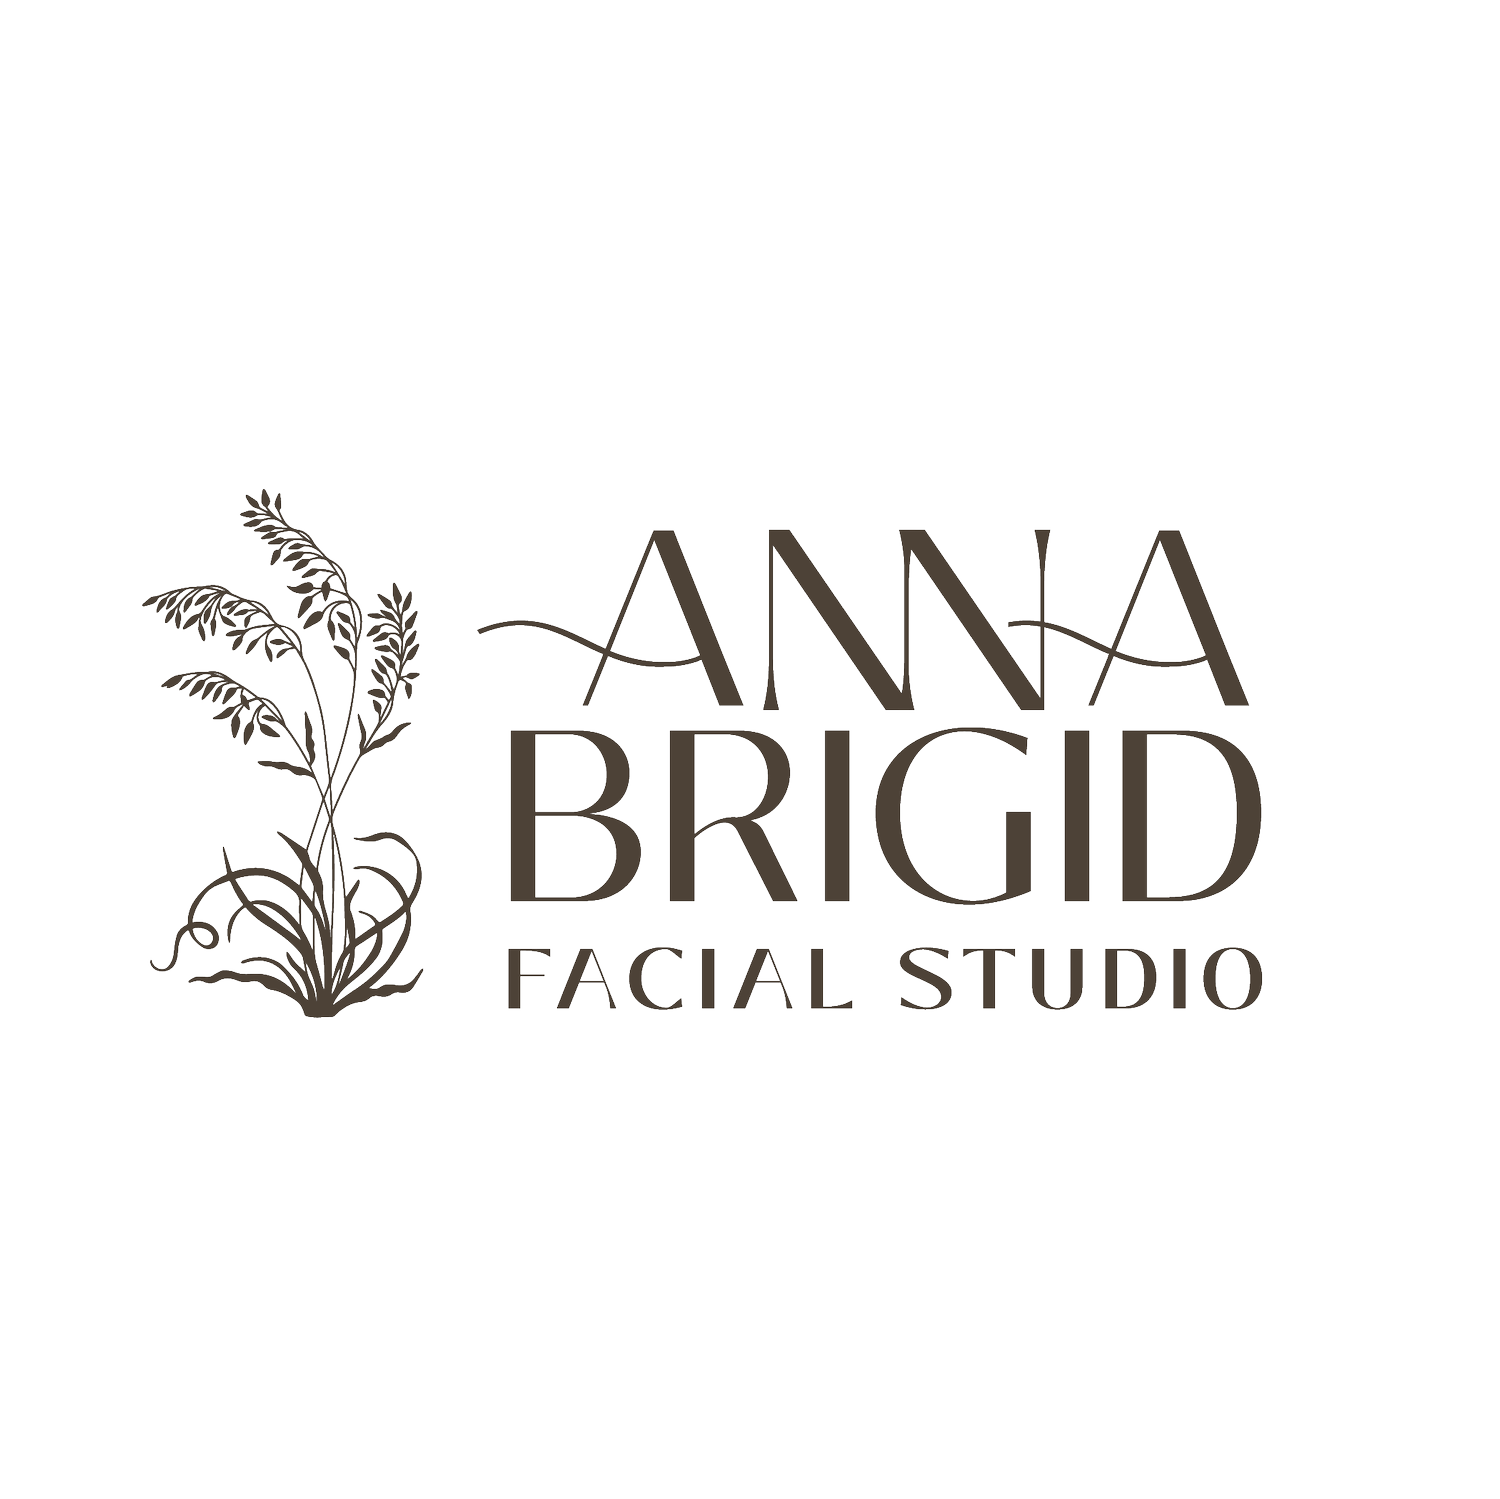 AB Facial Studio